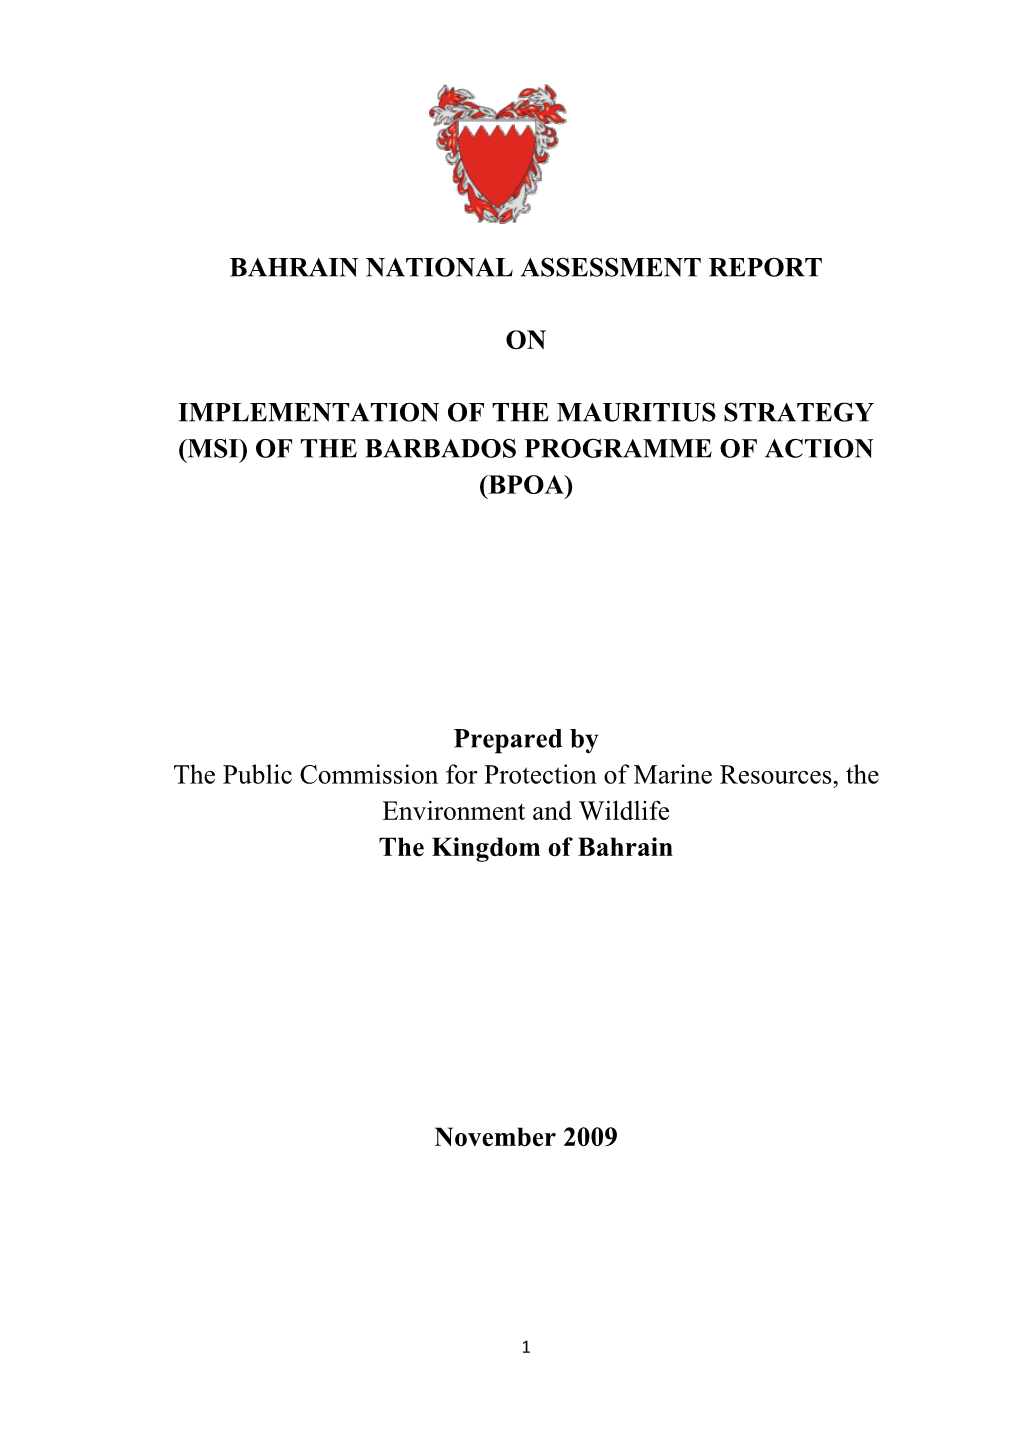 Bahrain National Assessment Report on Implementation